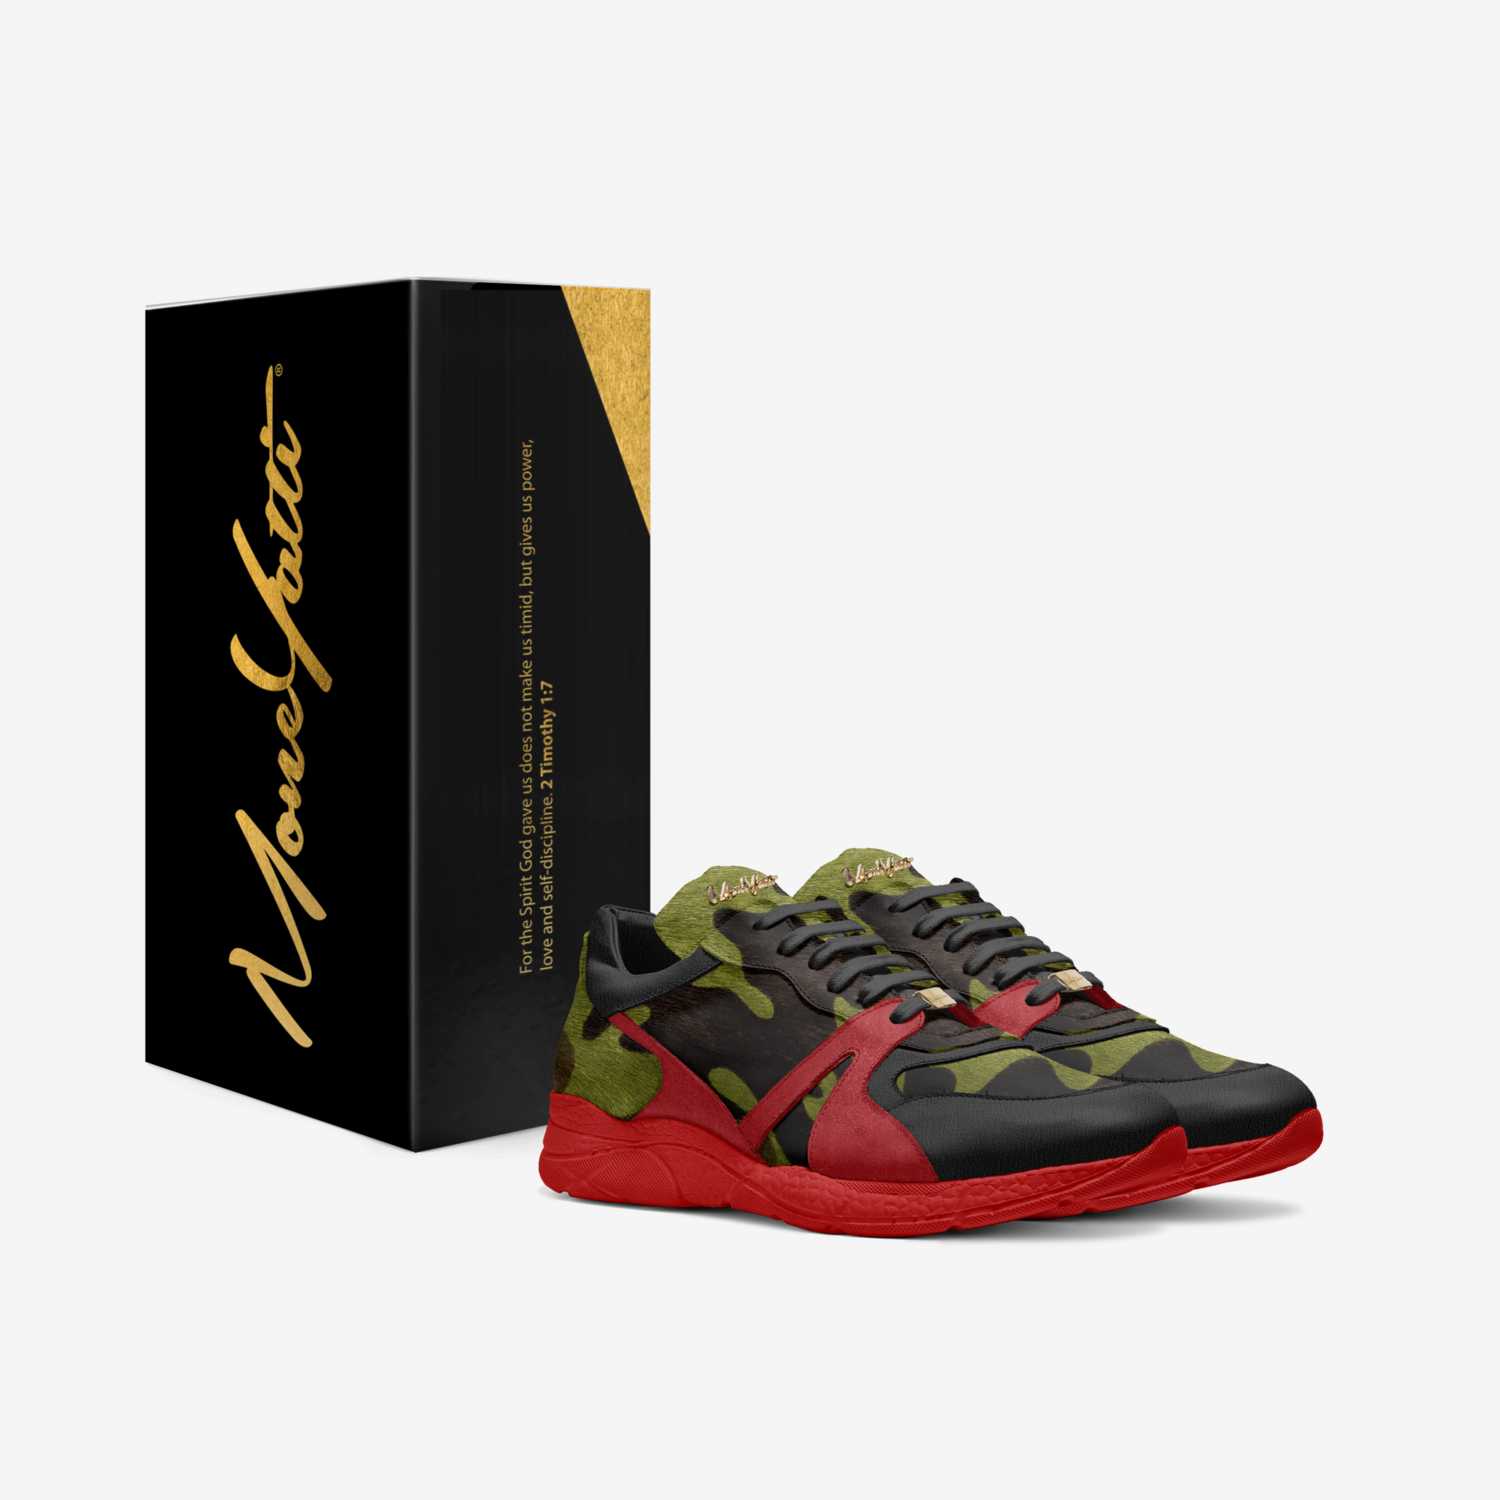 Nem P51 custom made in Italy shoes by Moneyatti Brand | Box view